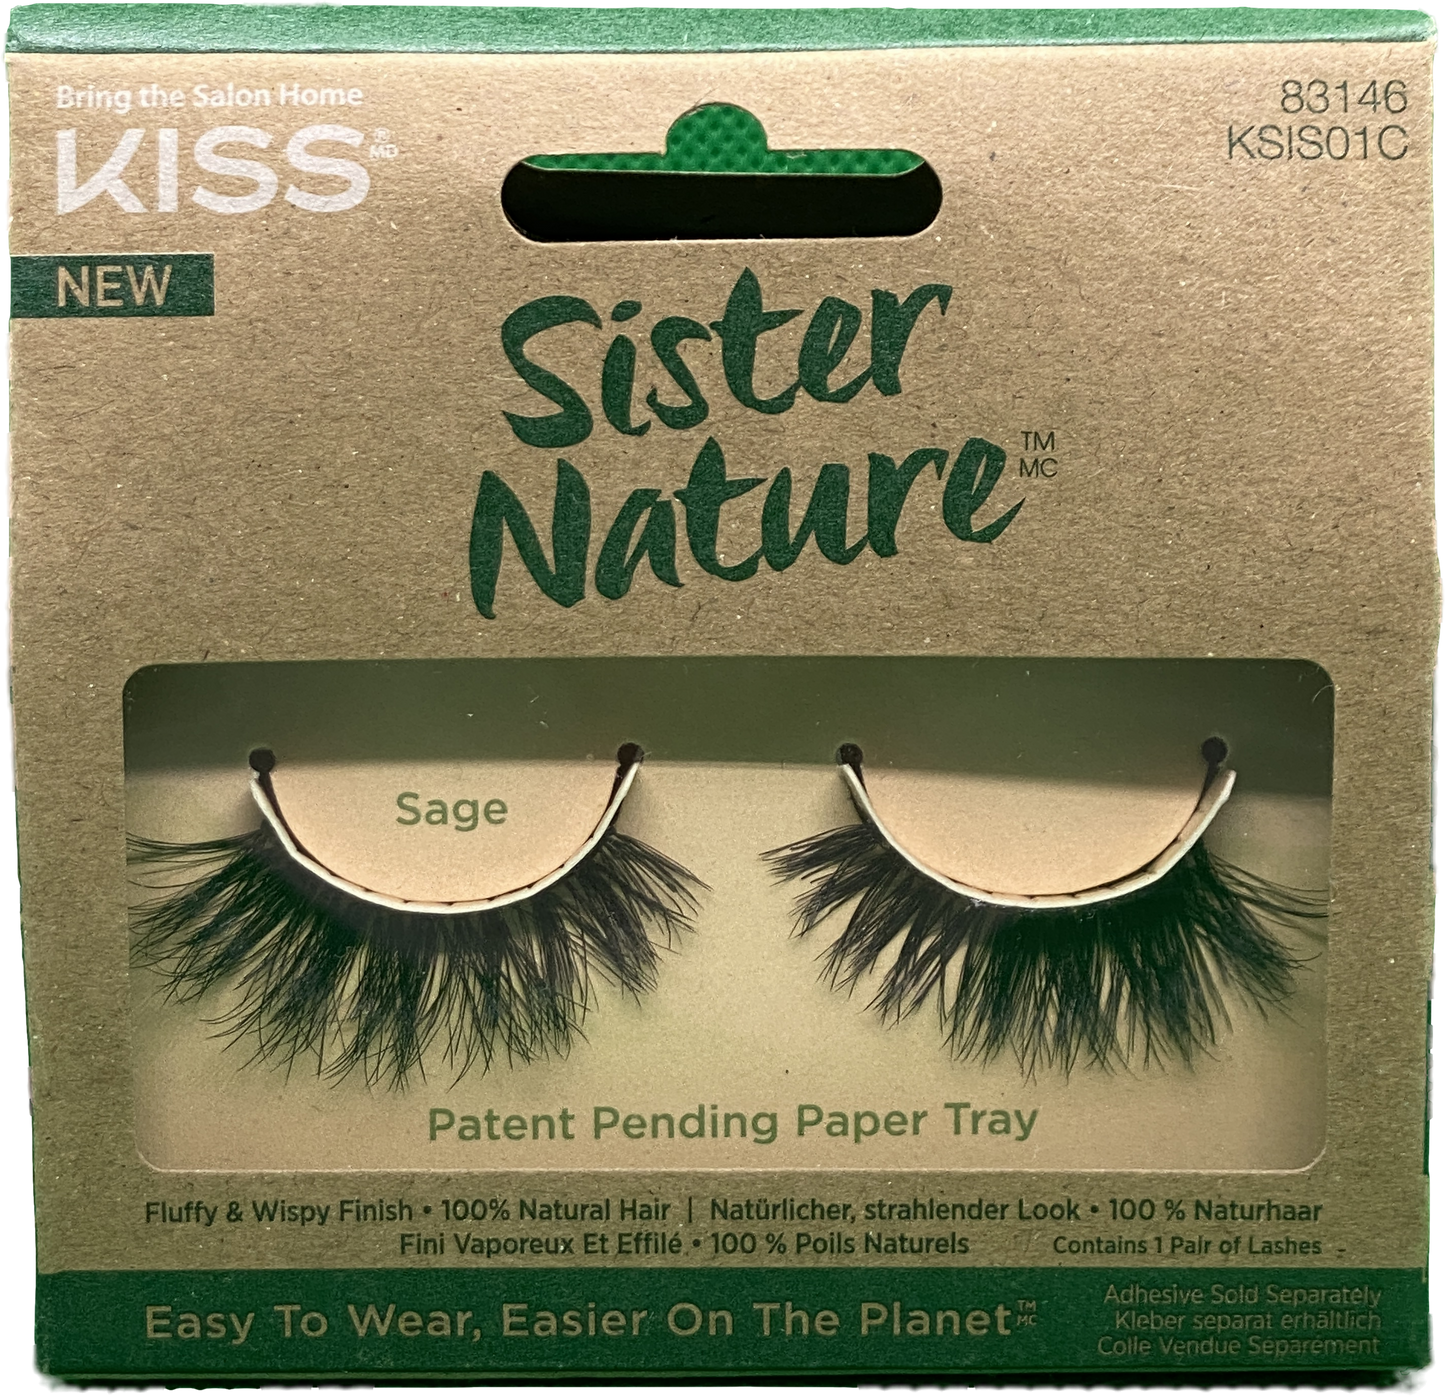 kiss Sister Nature Lash Sage 1 pair